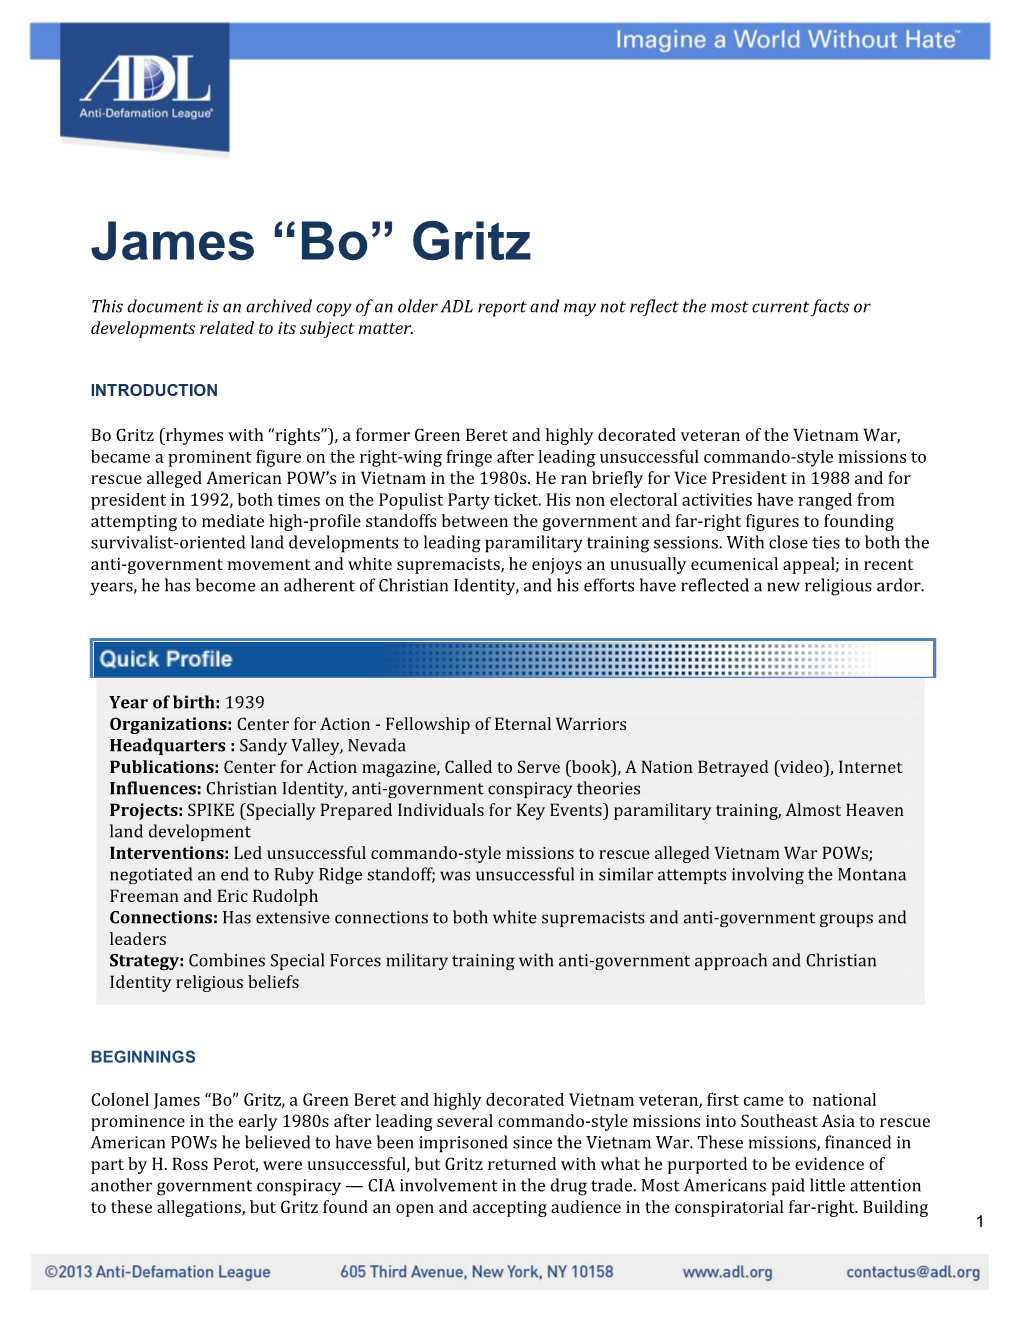 James “Bo” Gritz